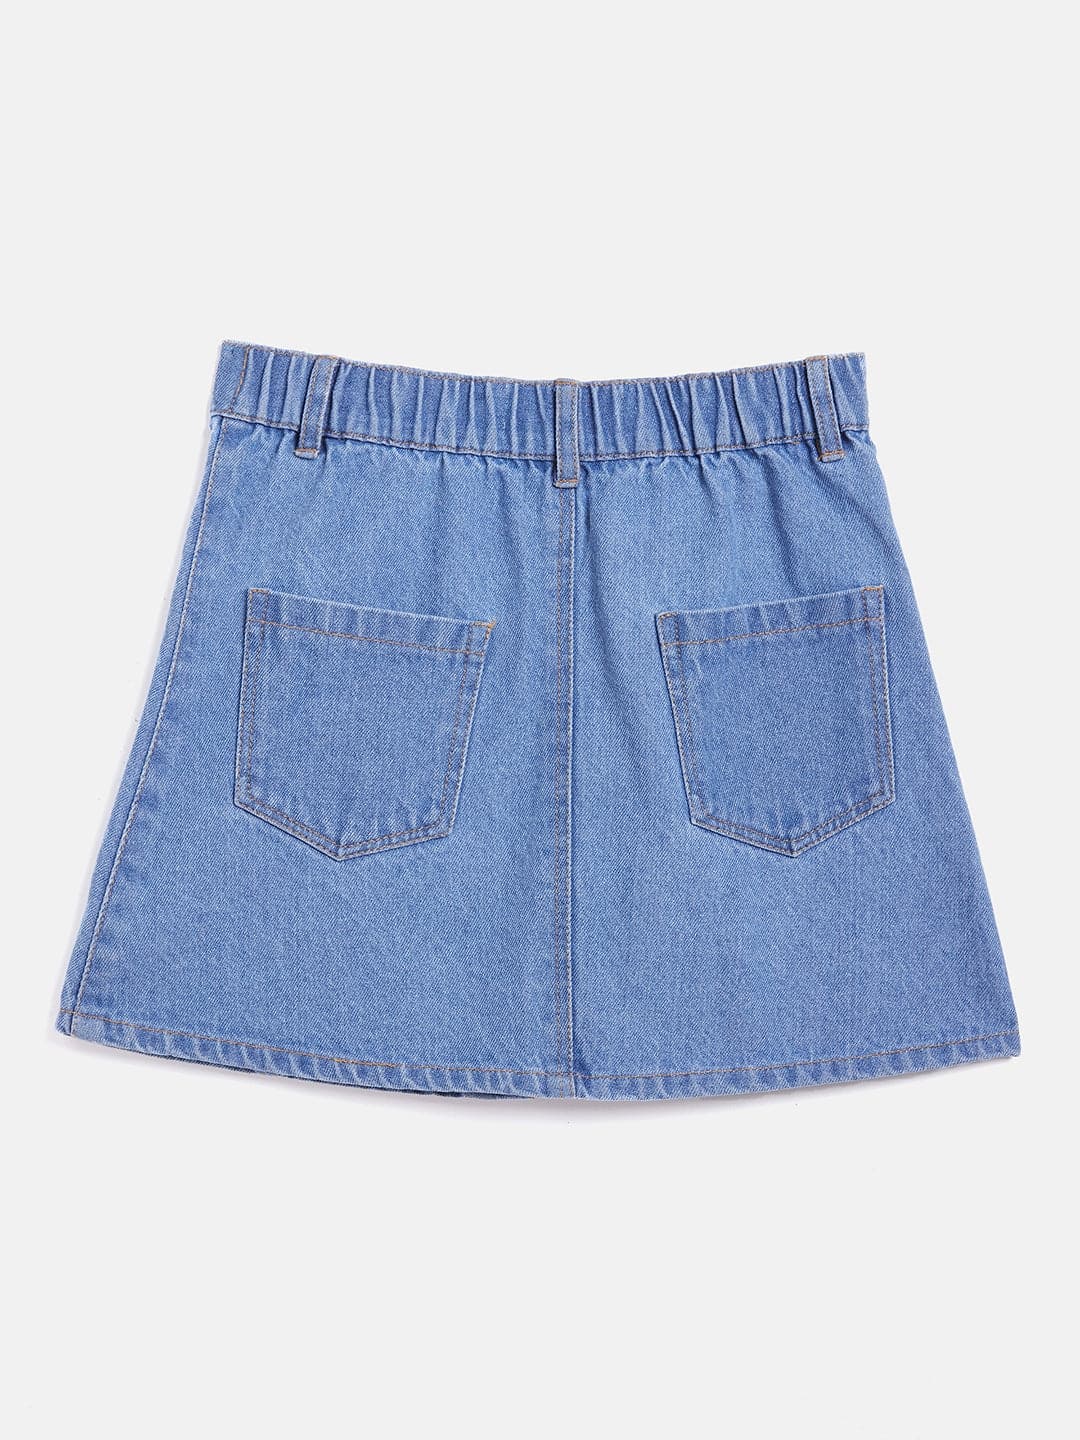 Girls Ice Blue Flower Print Denim Mini Skirt - Lyush Kids